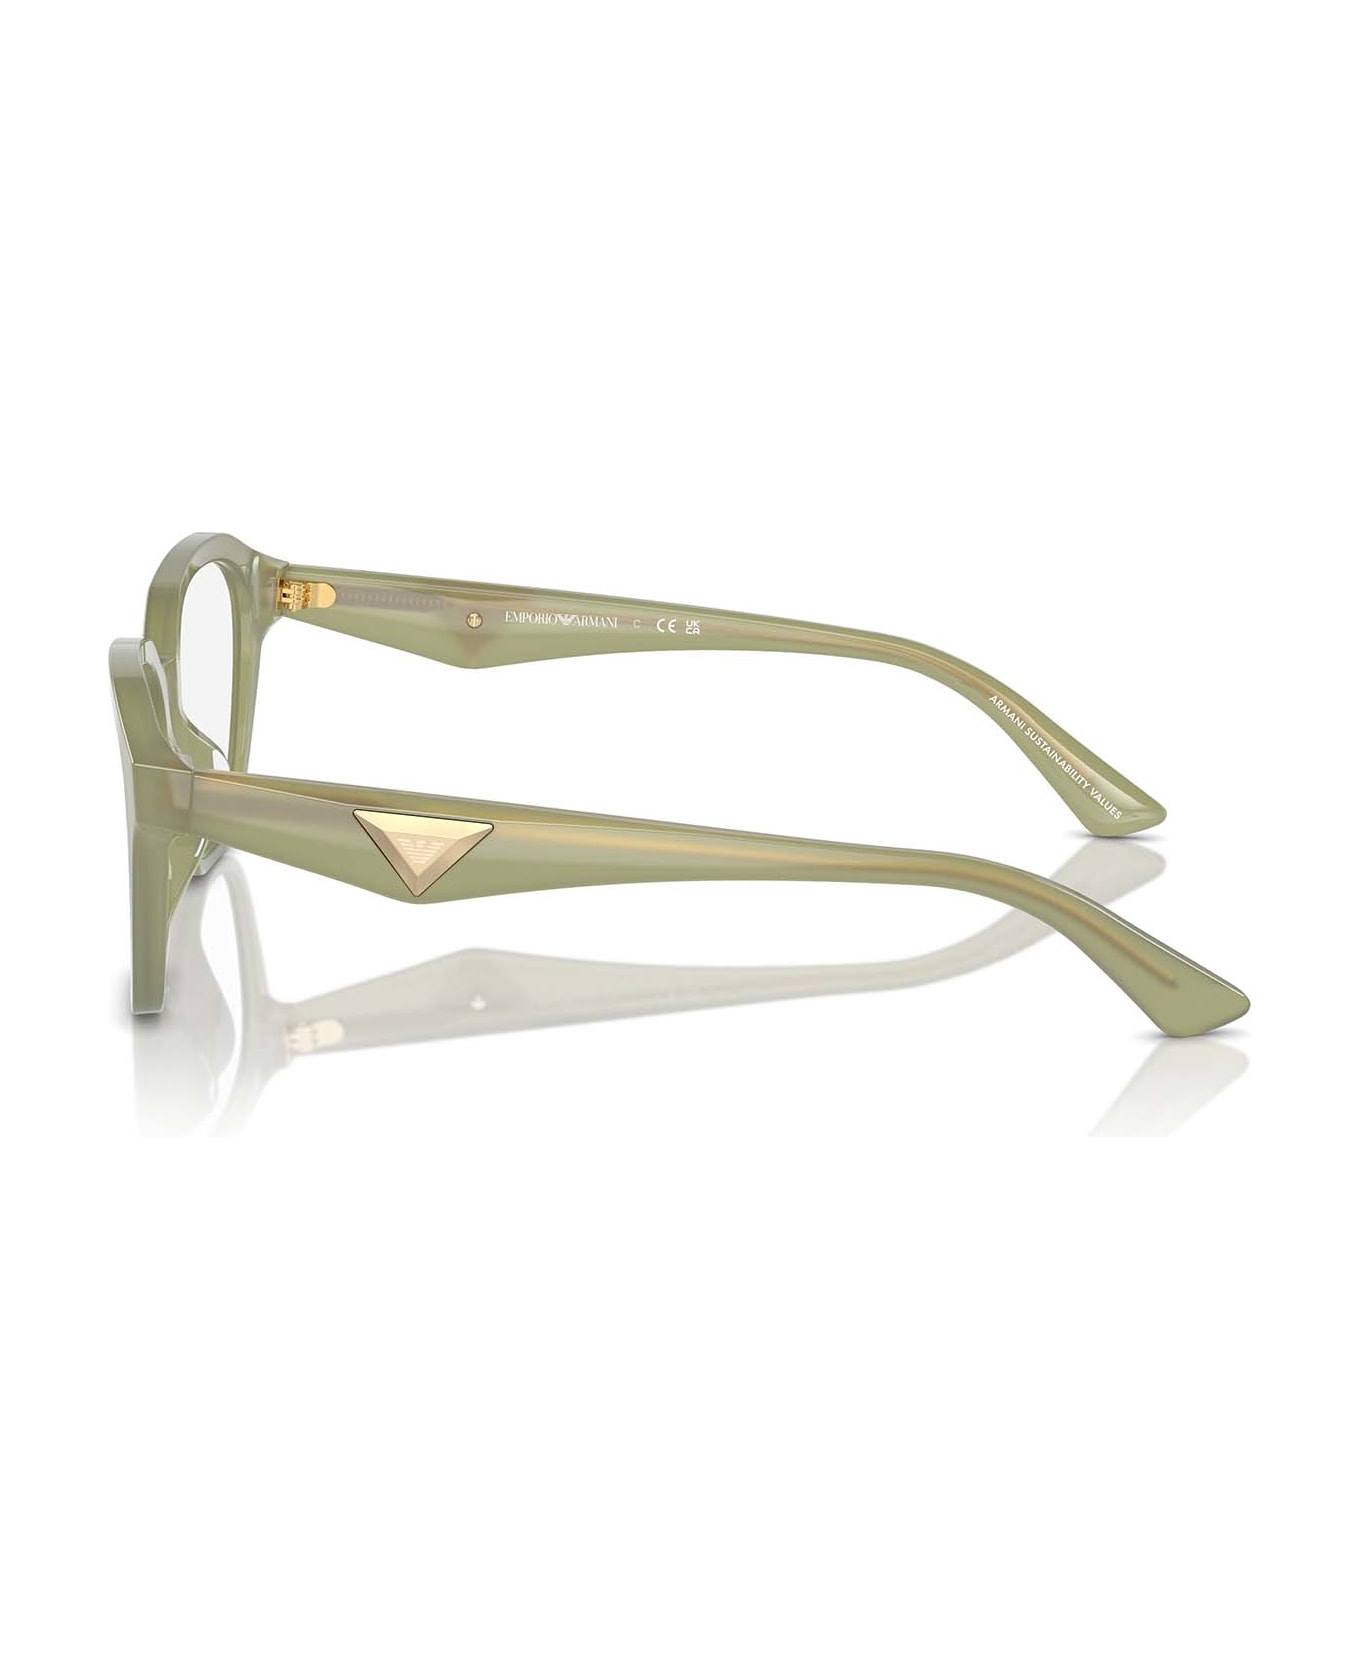 Emporio Armani Ea3235u Shiny Opaline Green Glasses - Shiny Opaline Green アイウェア